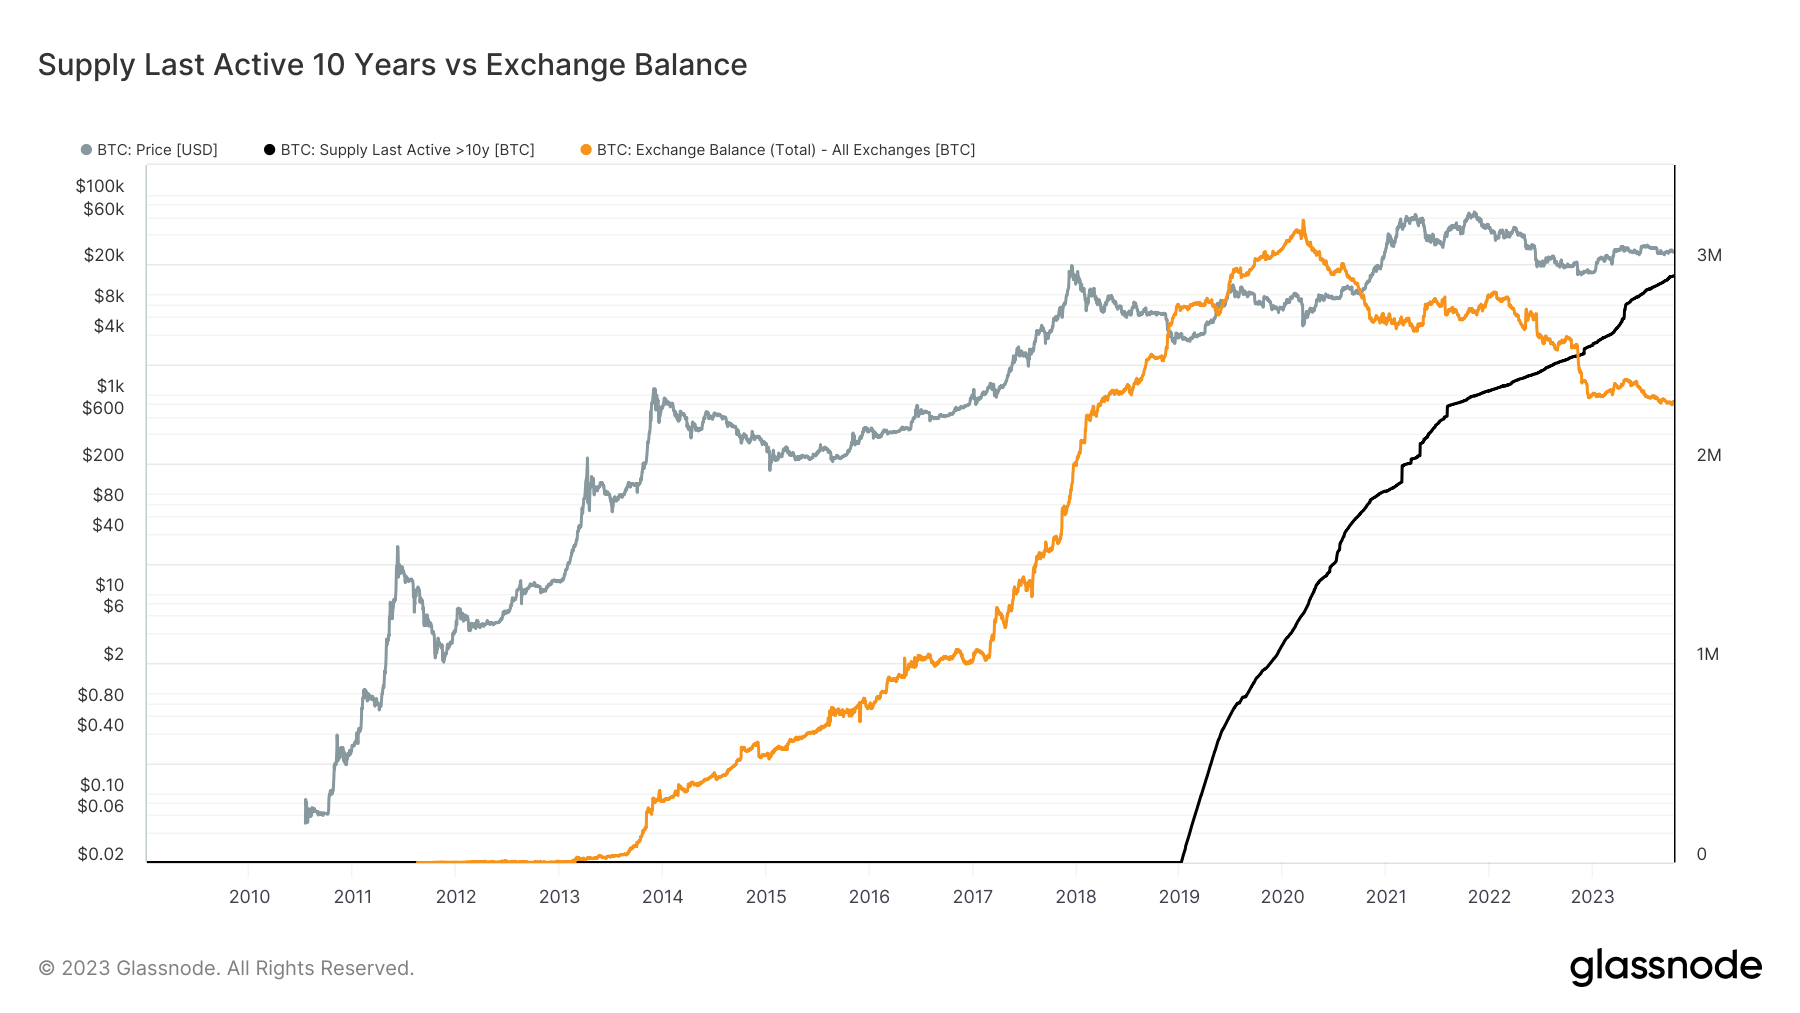 Supply Last Active 10 years ago + vs Exchange Balance: (Source: Glassnode)